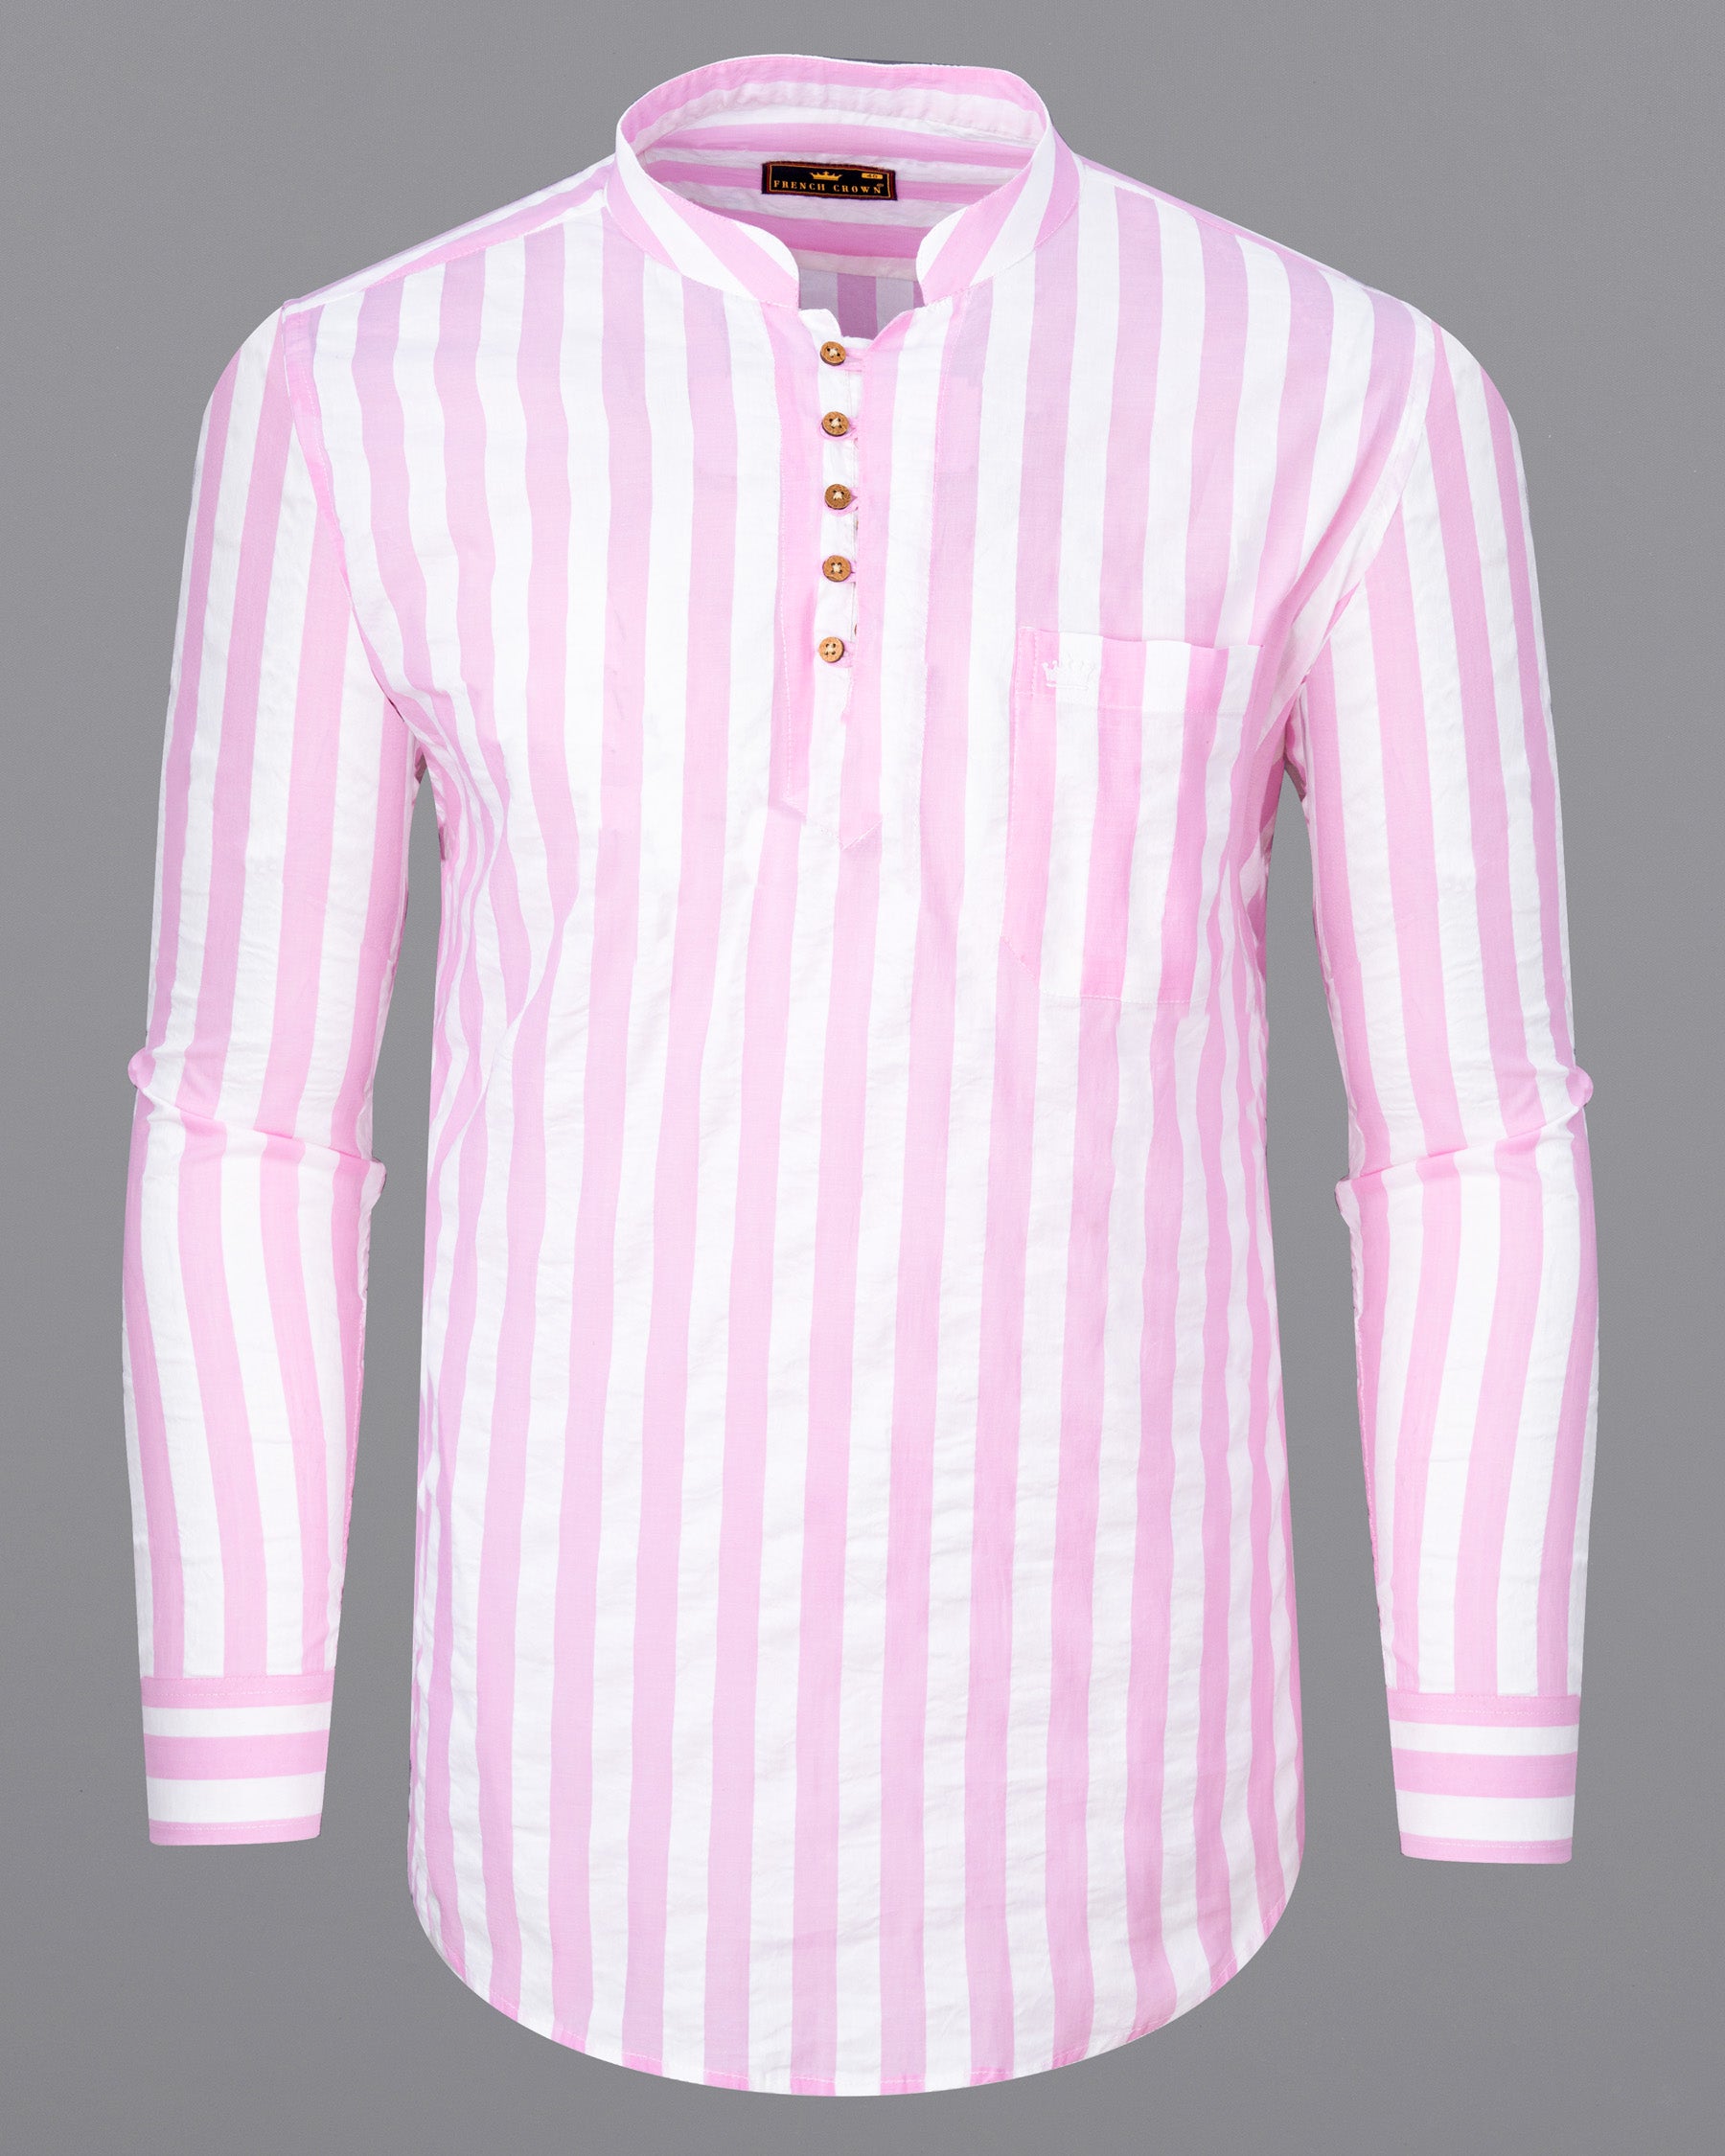 Bright White and Cherub Pink Striped Premium Cotton Kurta Shirt 6839-KS-38,6839-KS-38,6839-KS-39,6839-KS-39,6839-KS-40,6839-KS-40,6839-KS-42,6839-KS-42,6839-KS-44,6839-KS-44,6839-KS-46,6839-KS-46,6839-KS-48,6839-KS-48,6839-KS-50,6839-KS-50,6839-KS-52,6839-KS-52